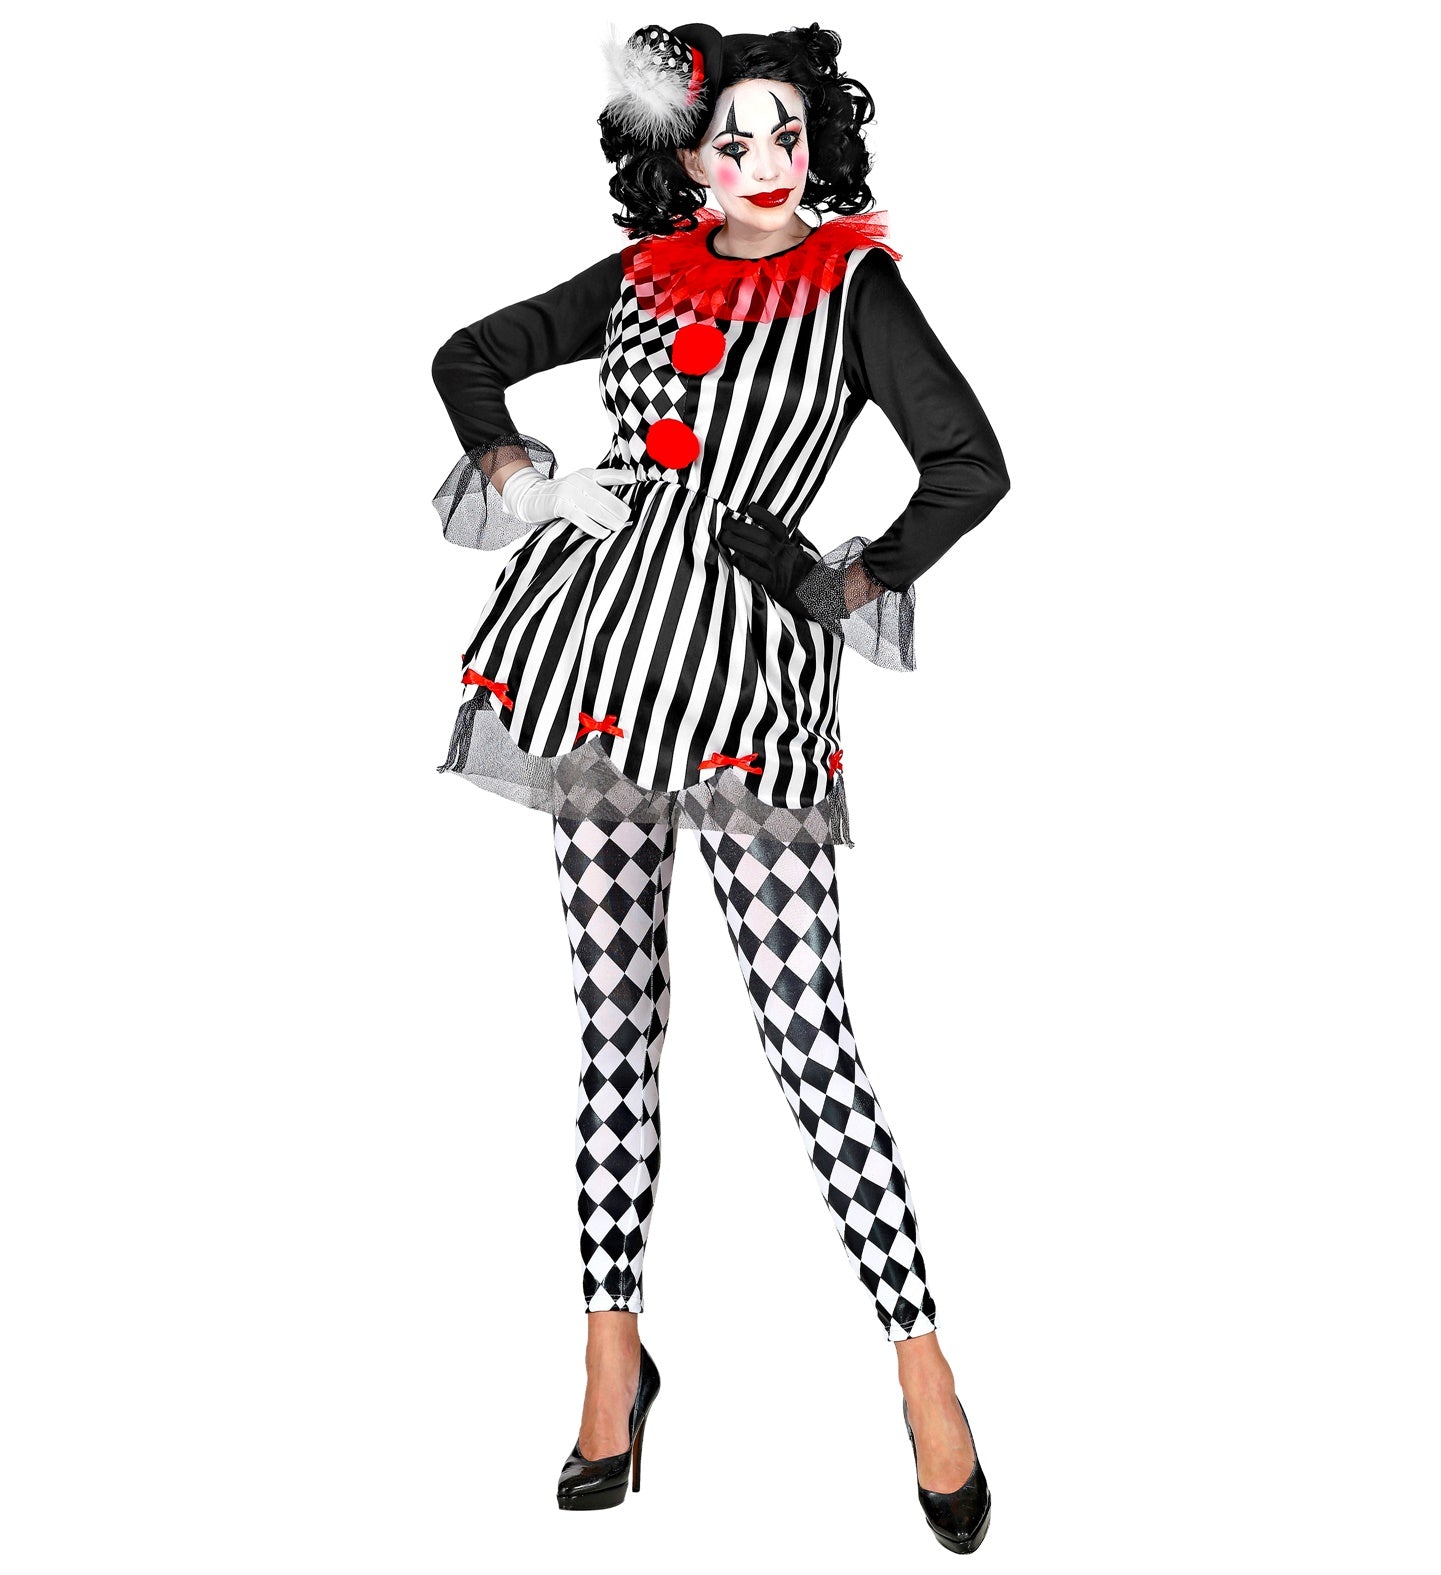 Rhombus Harlequin Leggings for clown costume